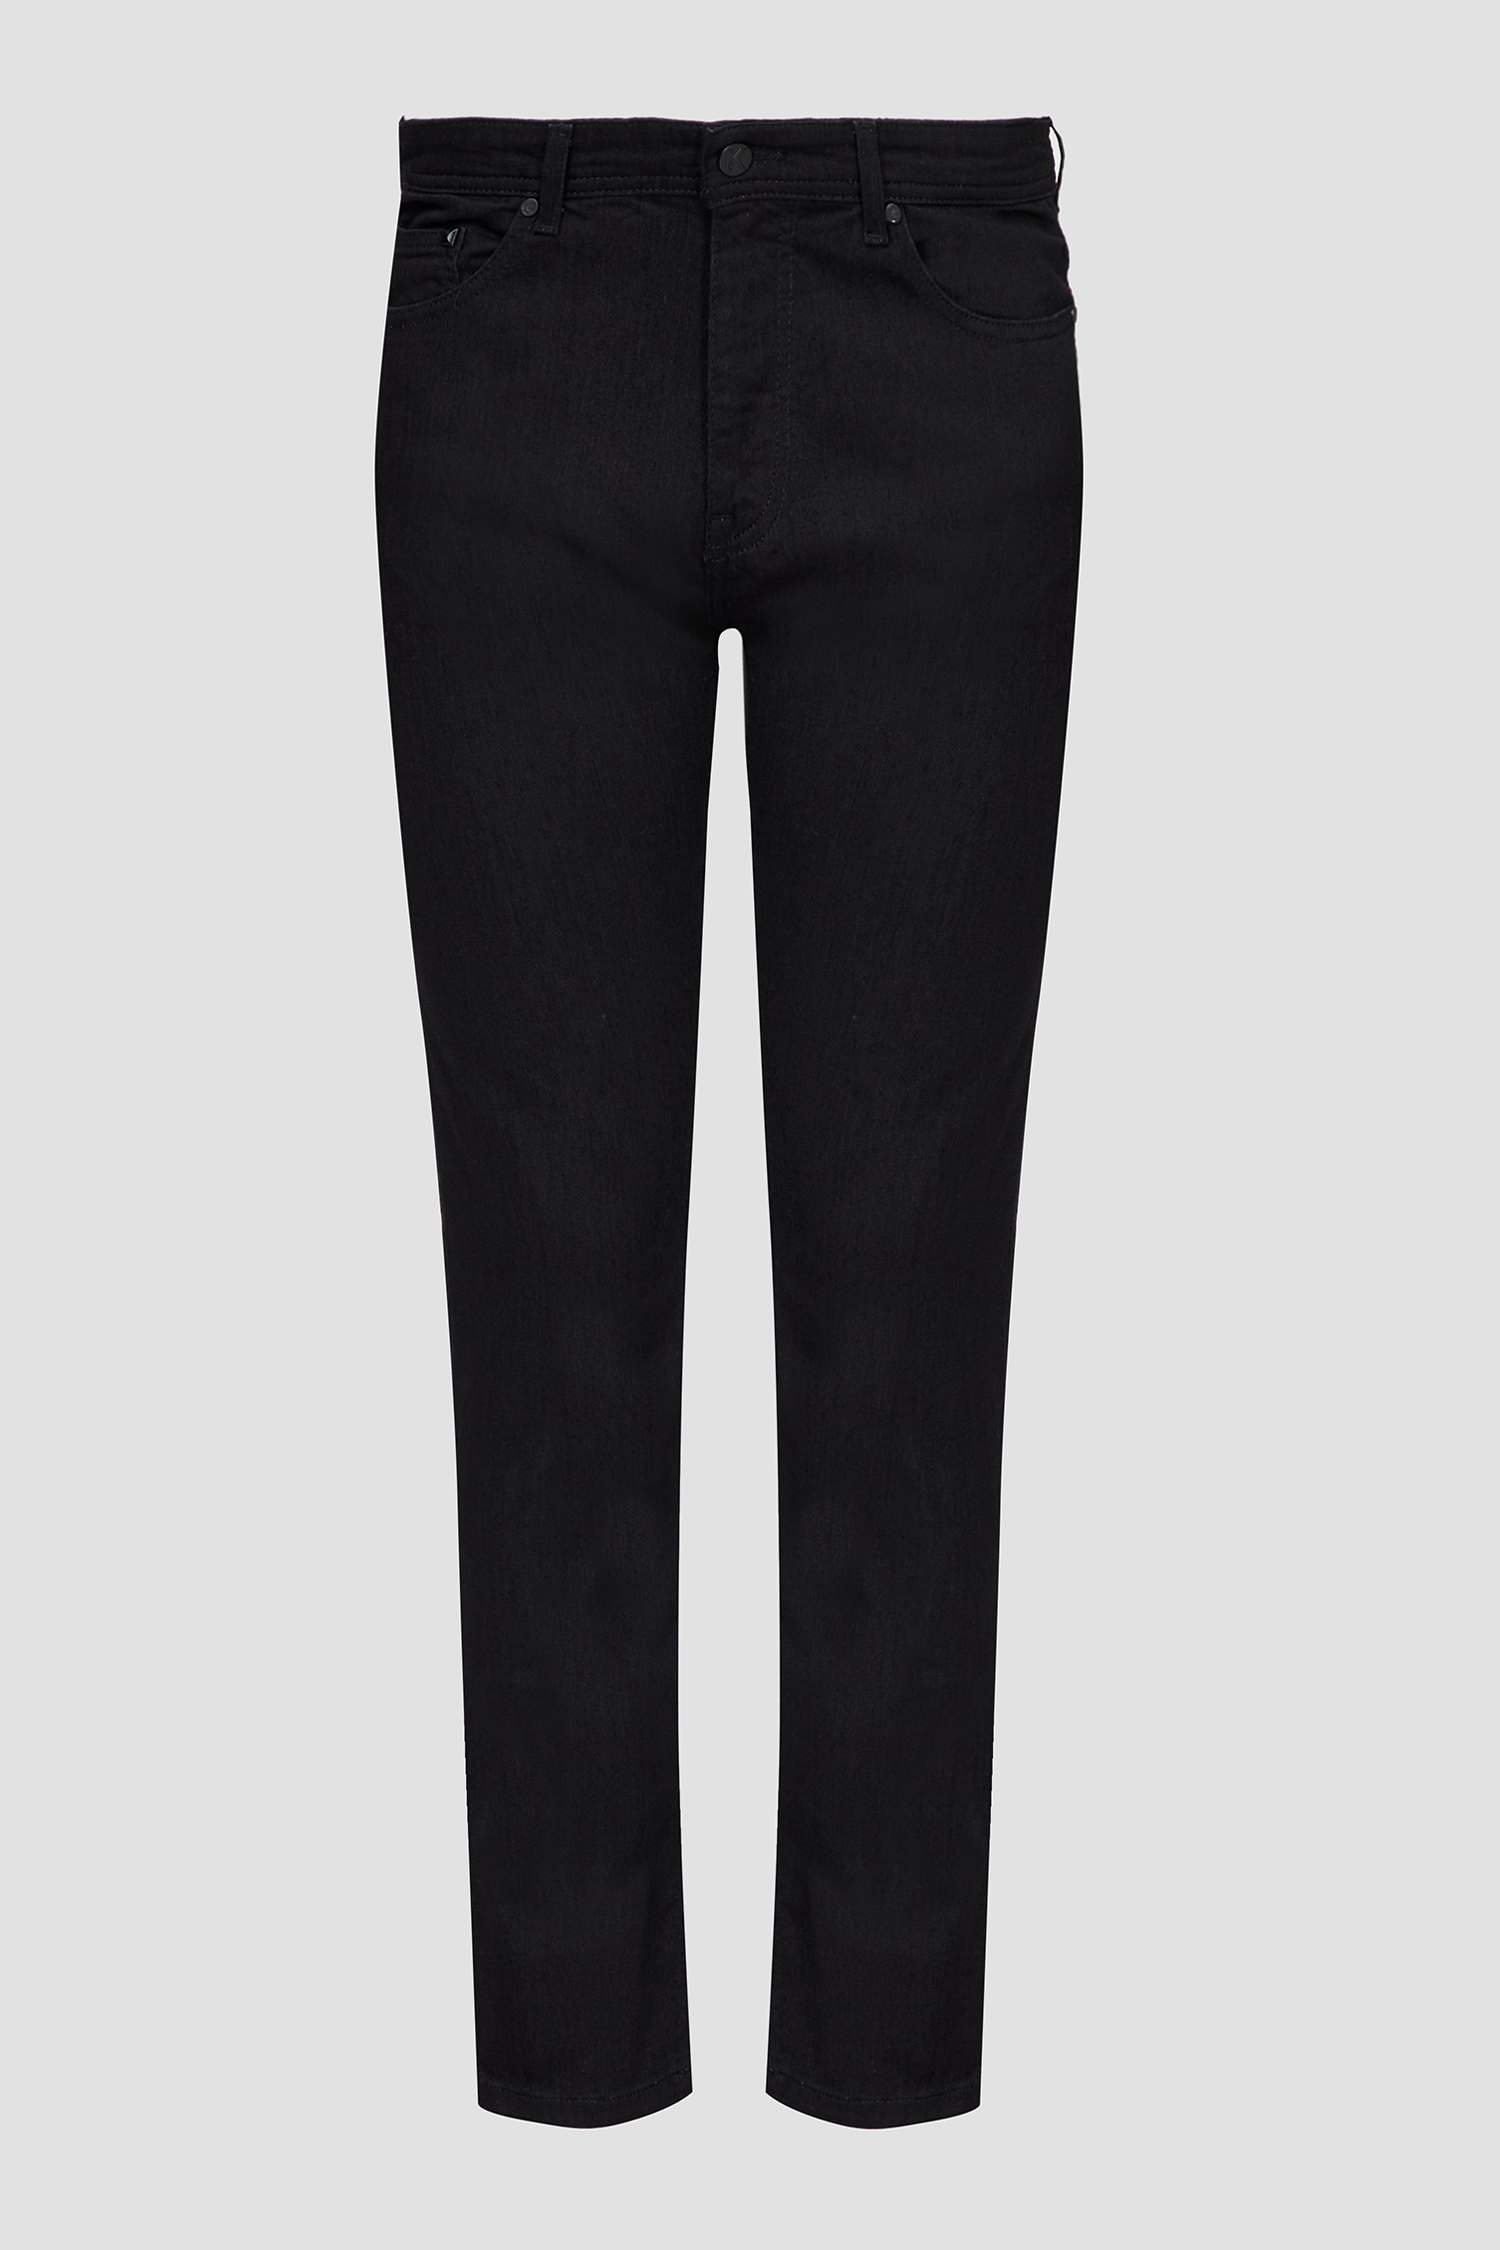 Мужские черные джинсы Karl Lagerfeld 533831.265840;909